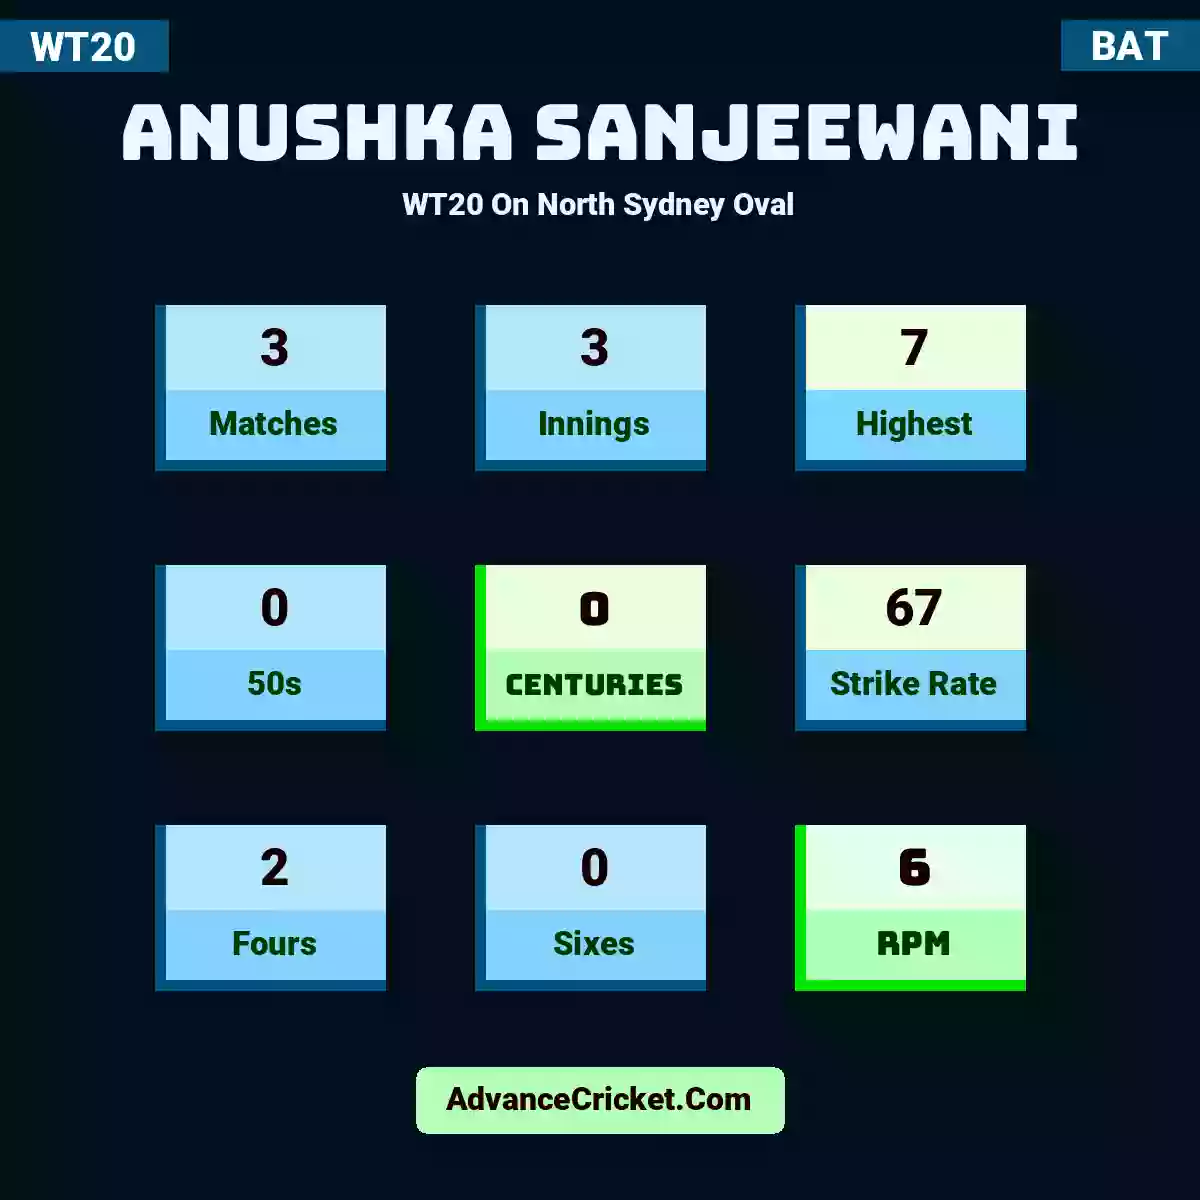 Anushka Sanjeewani WT20  On North Sydney Oval, Anushka Sanjeewani played 3 matches, scored 7 runs as highest, 0 half-centuries, and 0 centuries, with a strike rate of 67. A.Sanjeewani hit 2 fours and 0 sixes, with an RPM of 6.